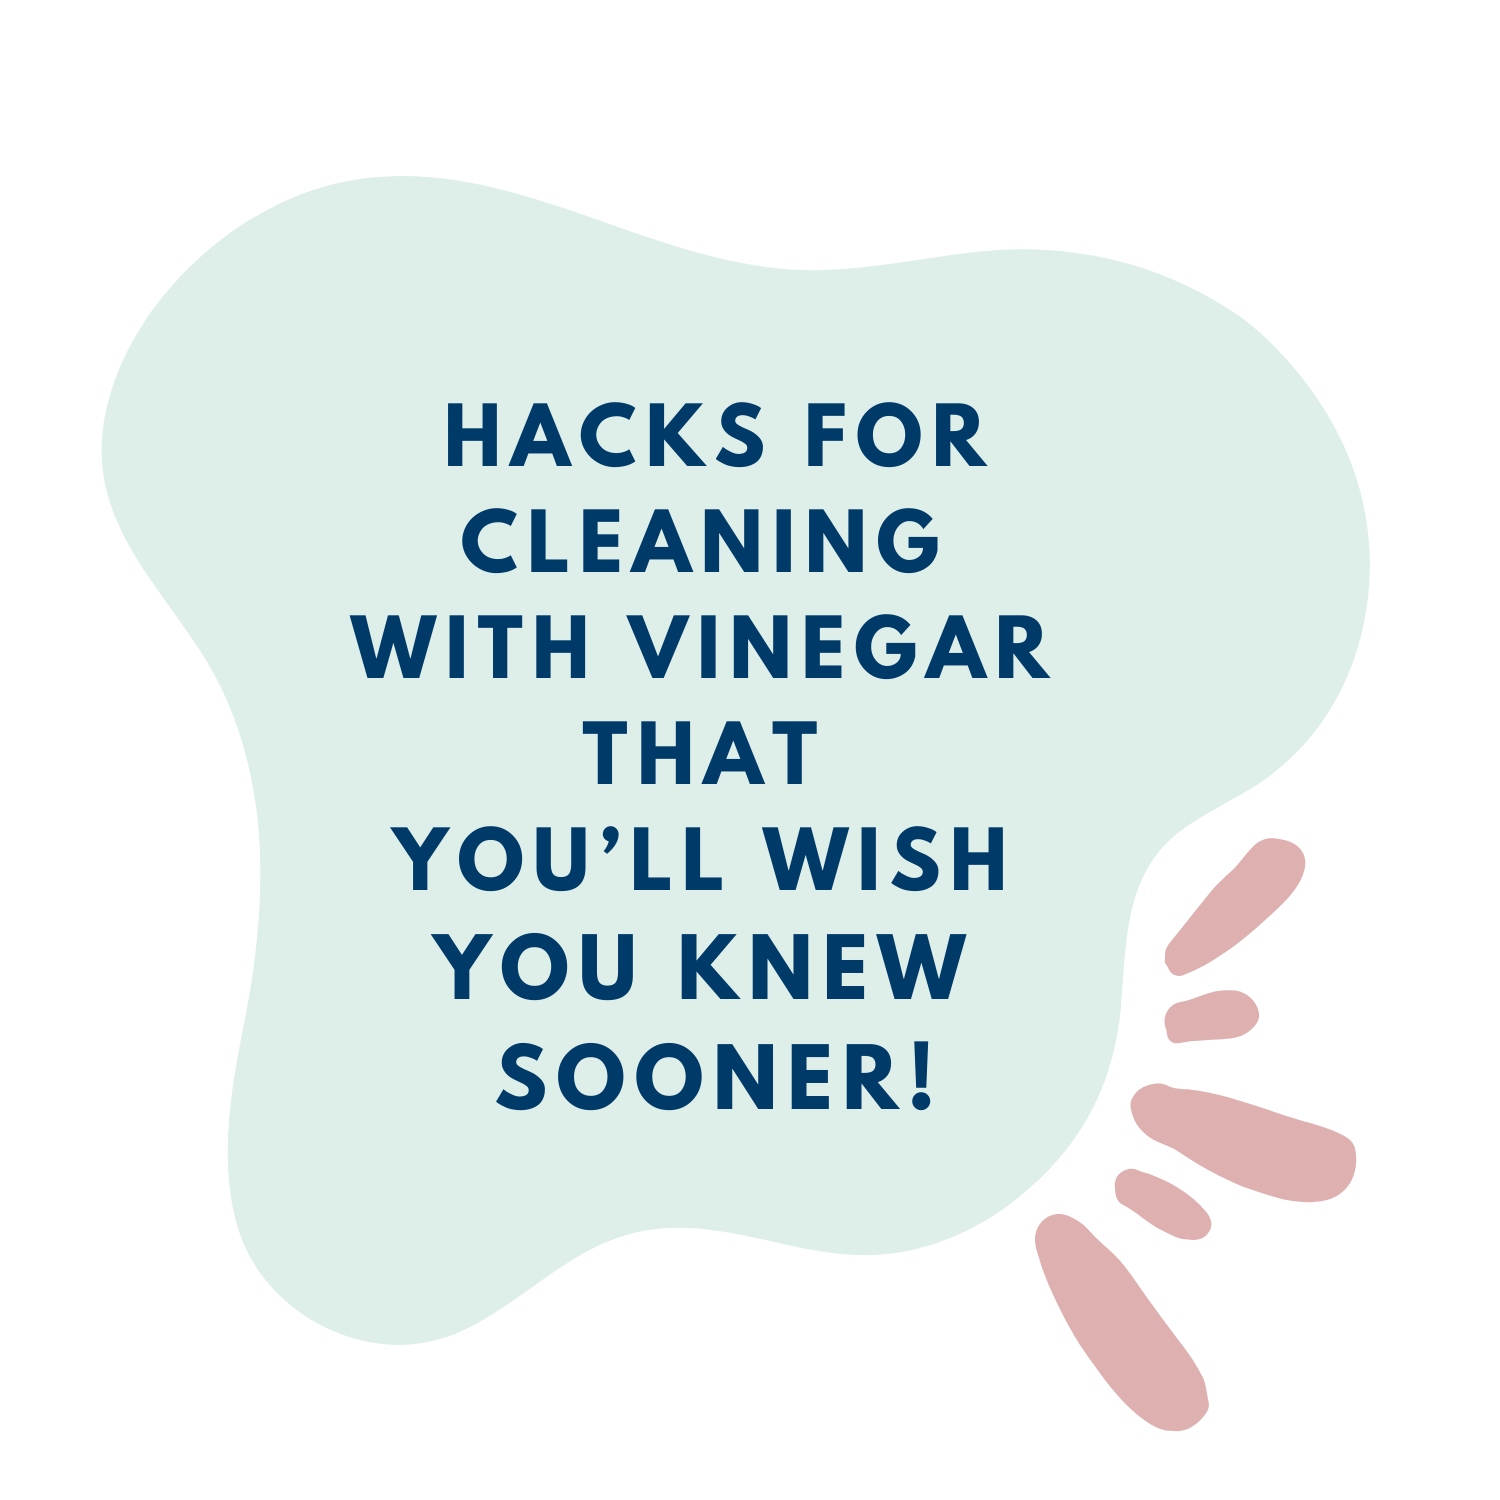 vinegar cleaning tips guide description 